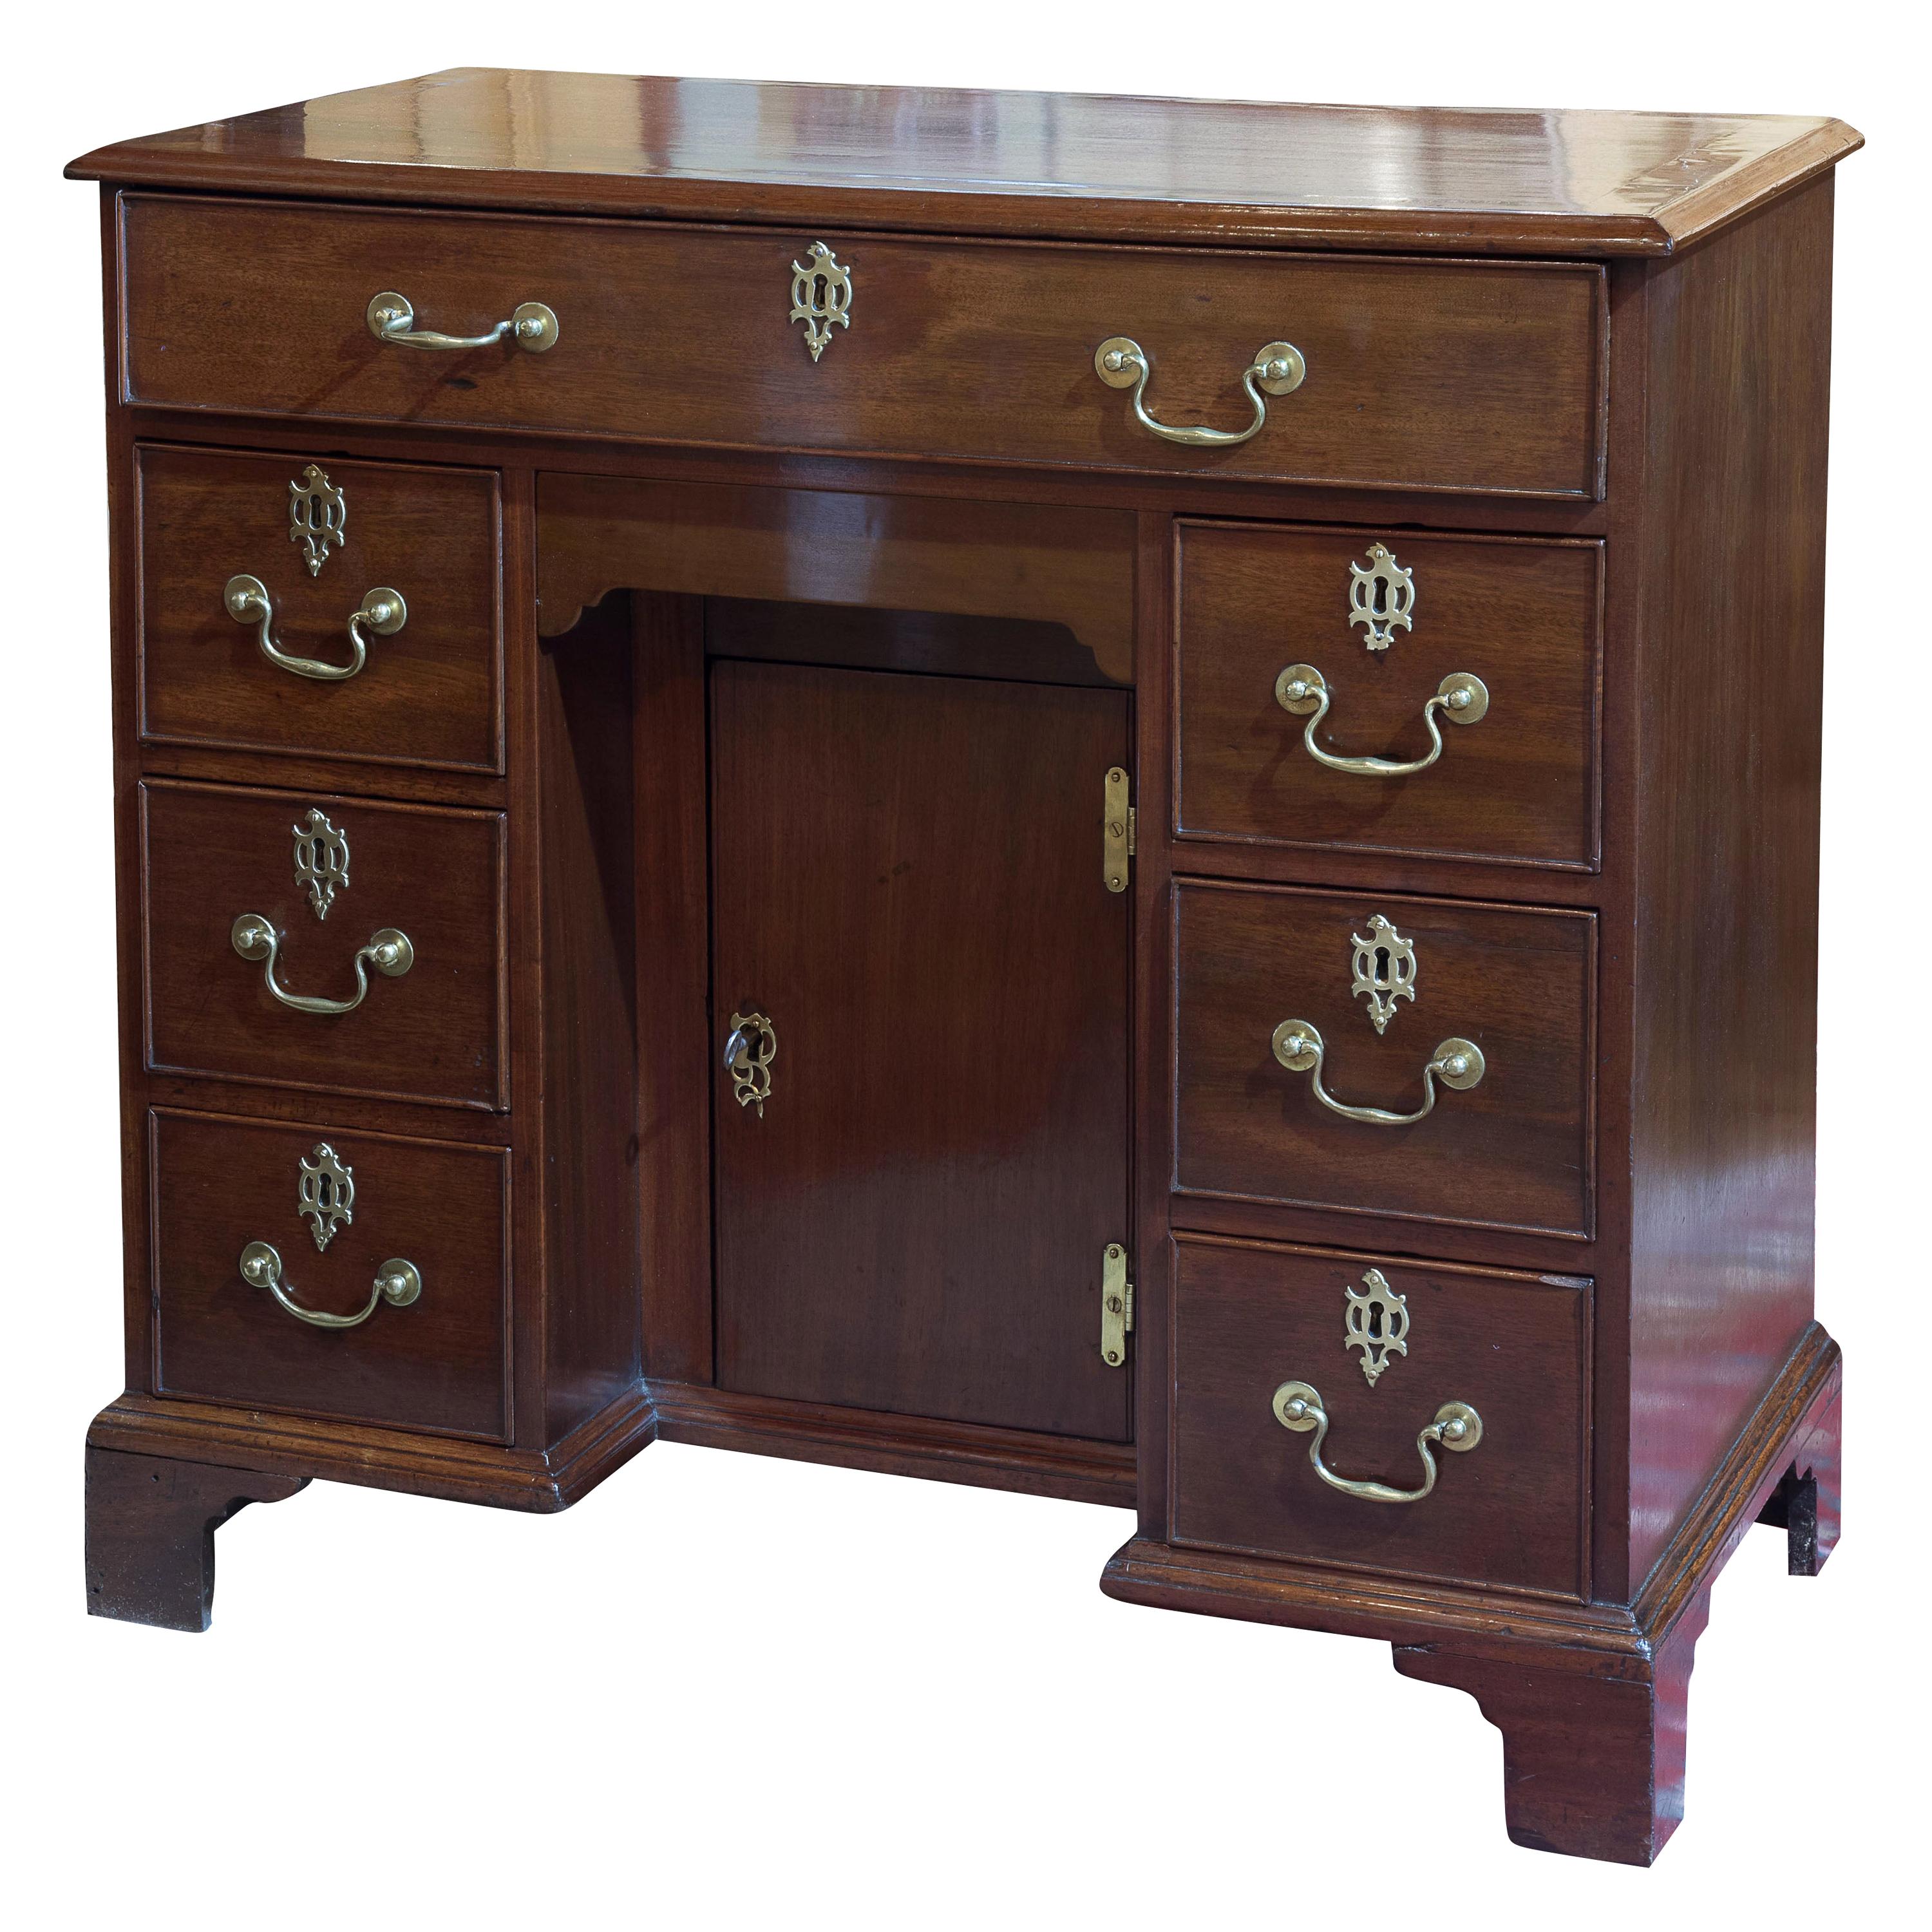 Striking George III Mahogany Kneehole Desk with Original Hardware For Sale